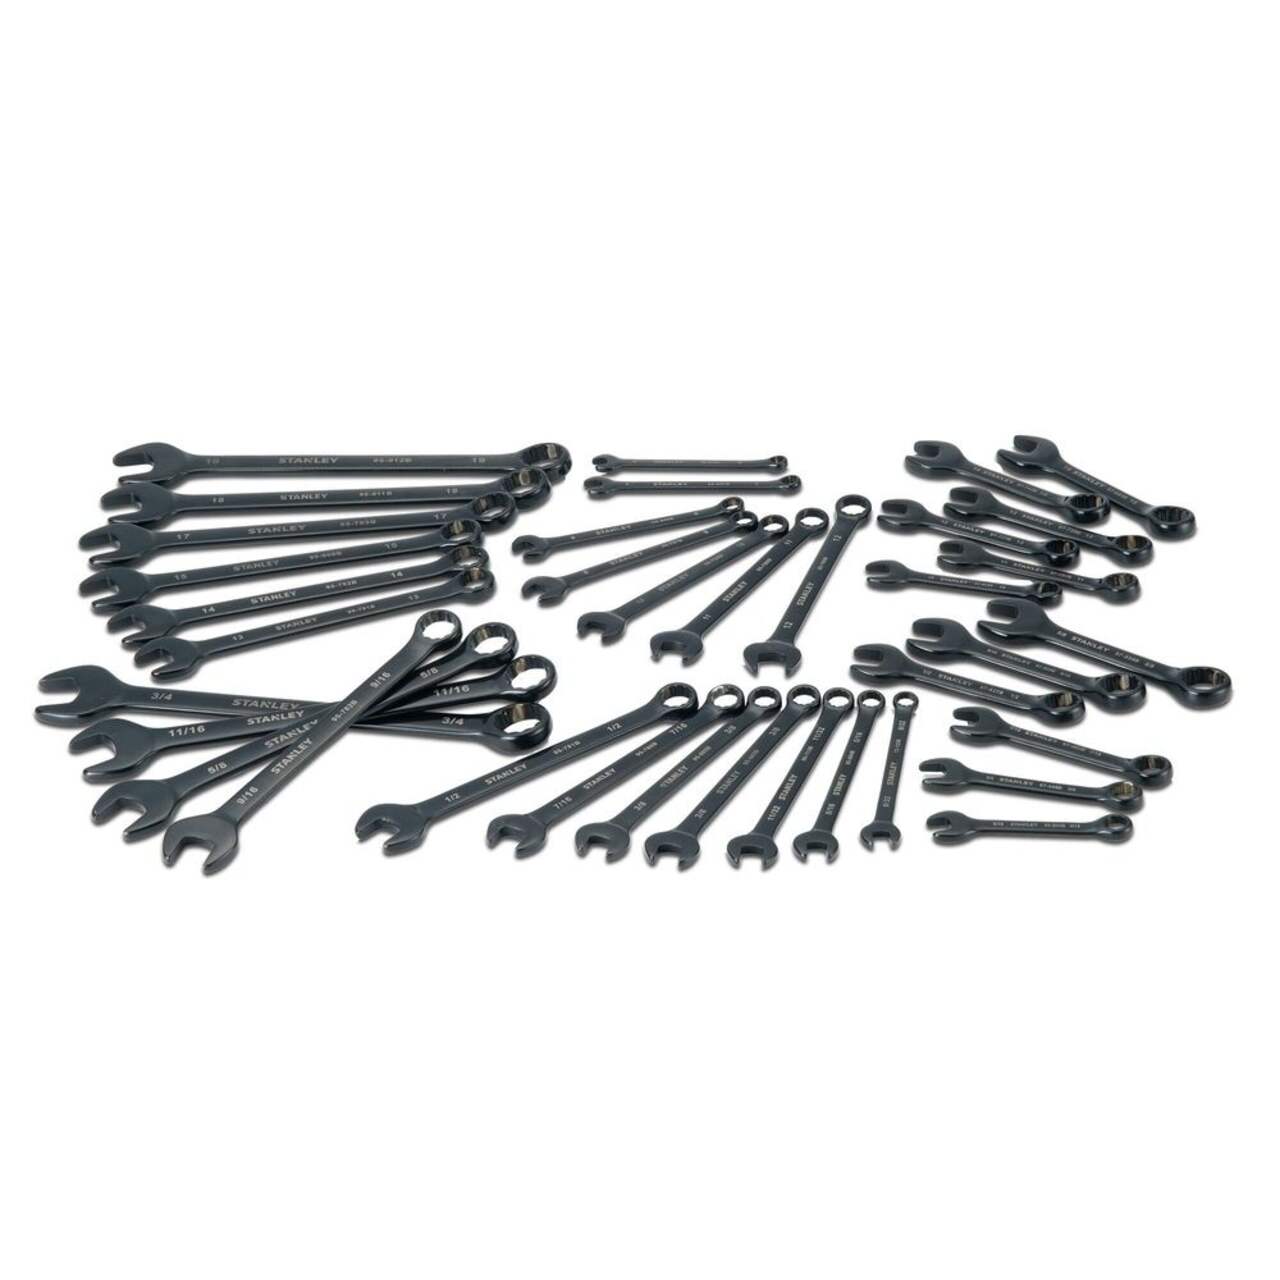 Stanley Professional Grade Black Chrome Flex Head Ratcheting Wrench Set,  SAE/Metric, 14-pc